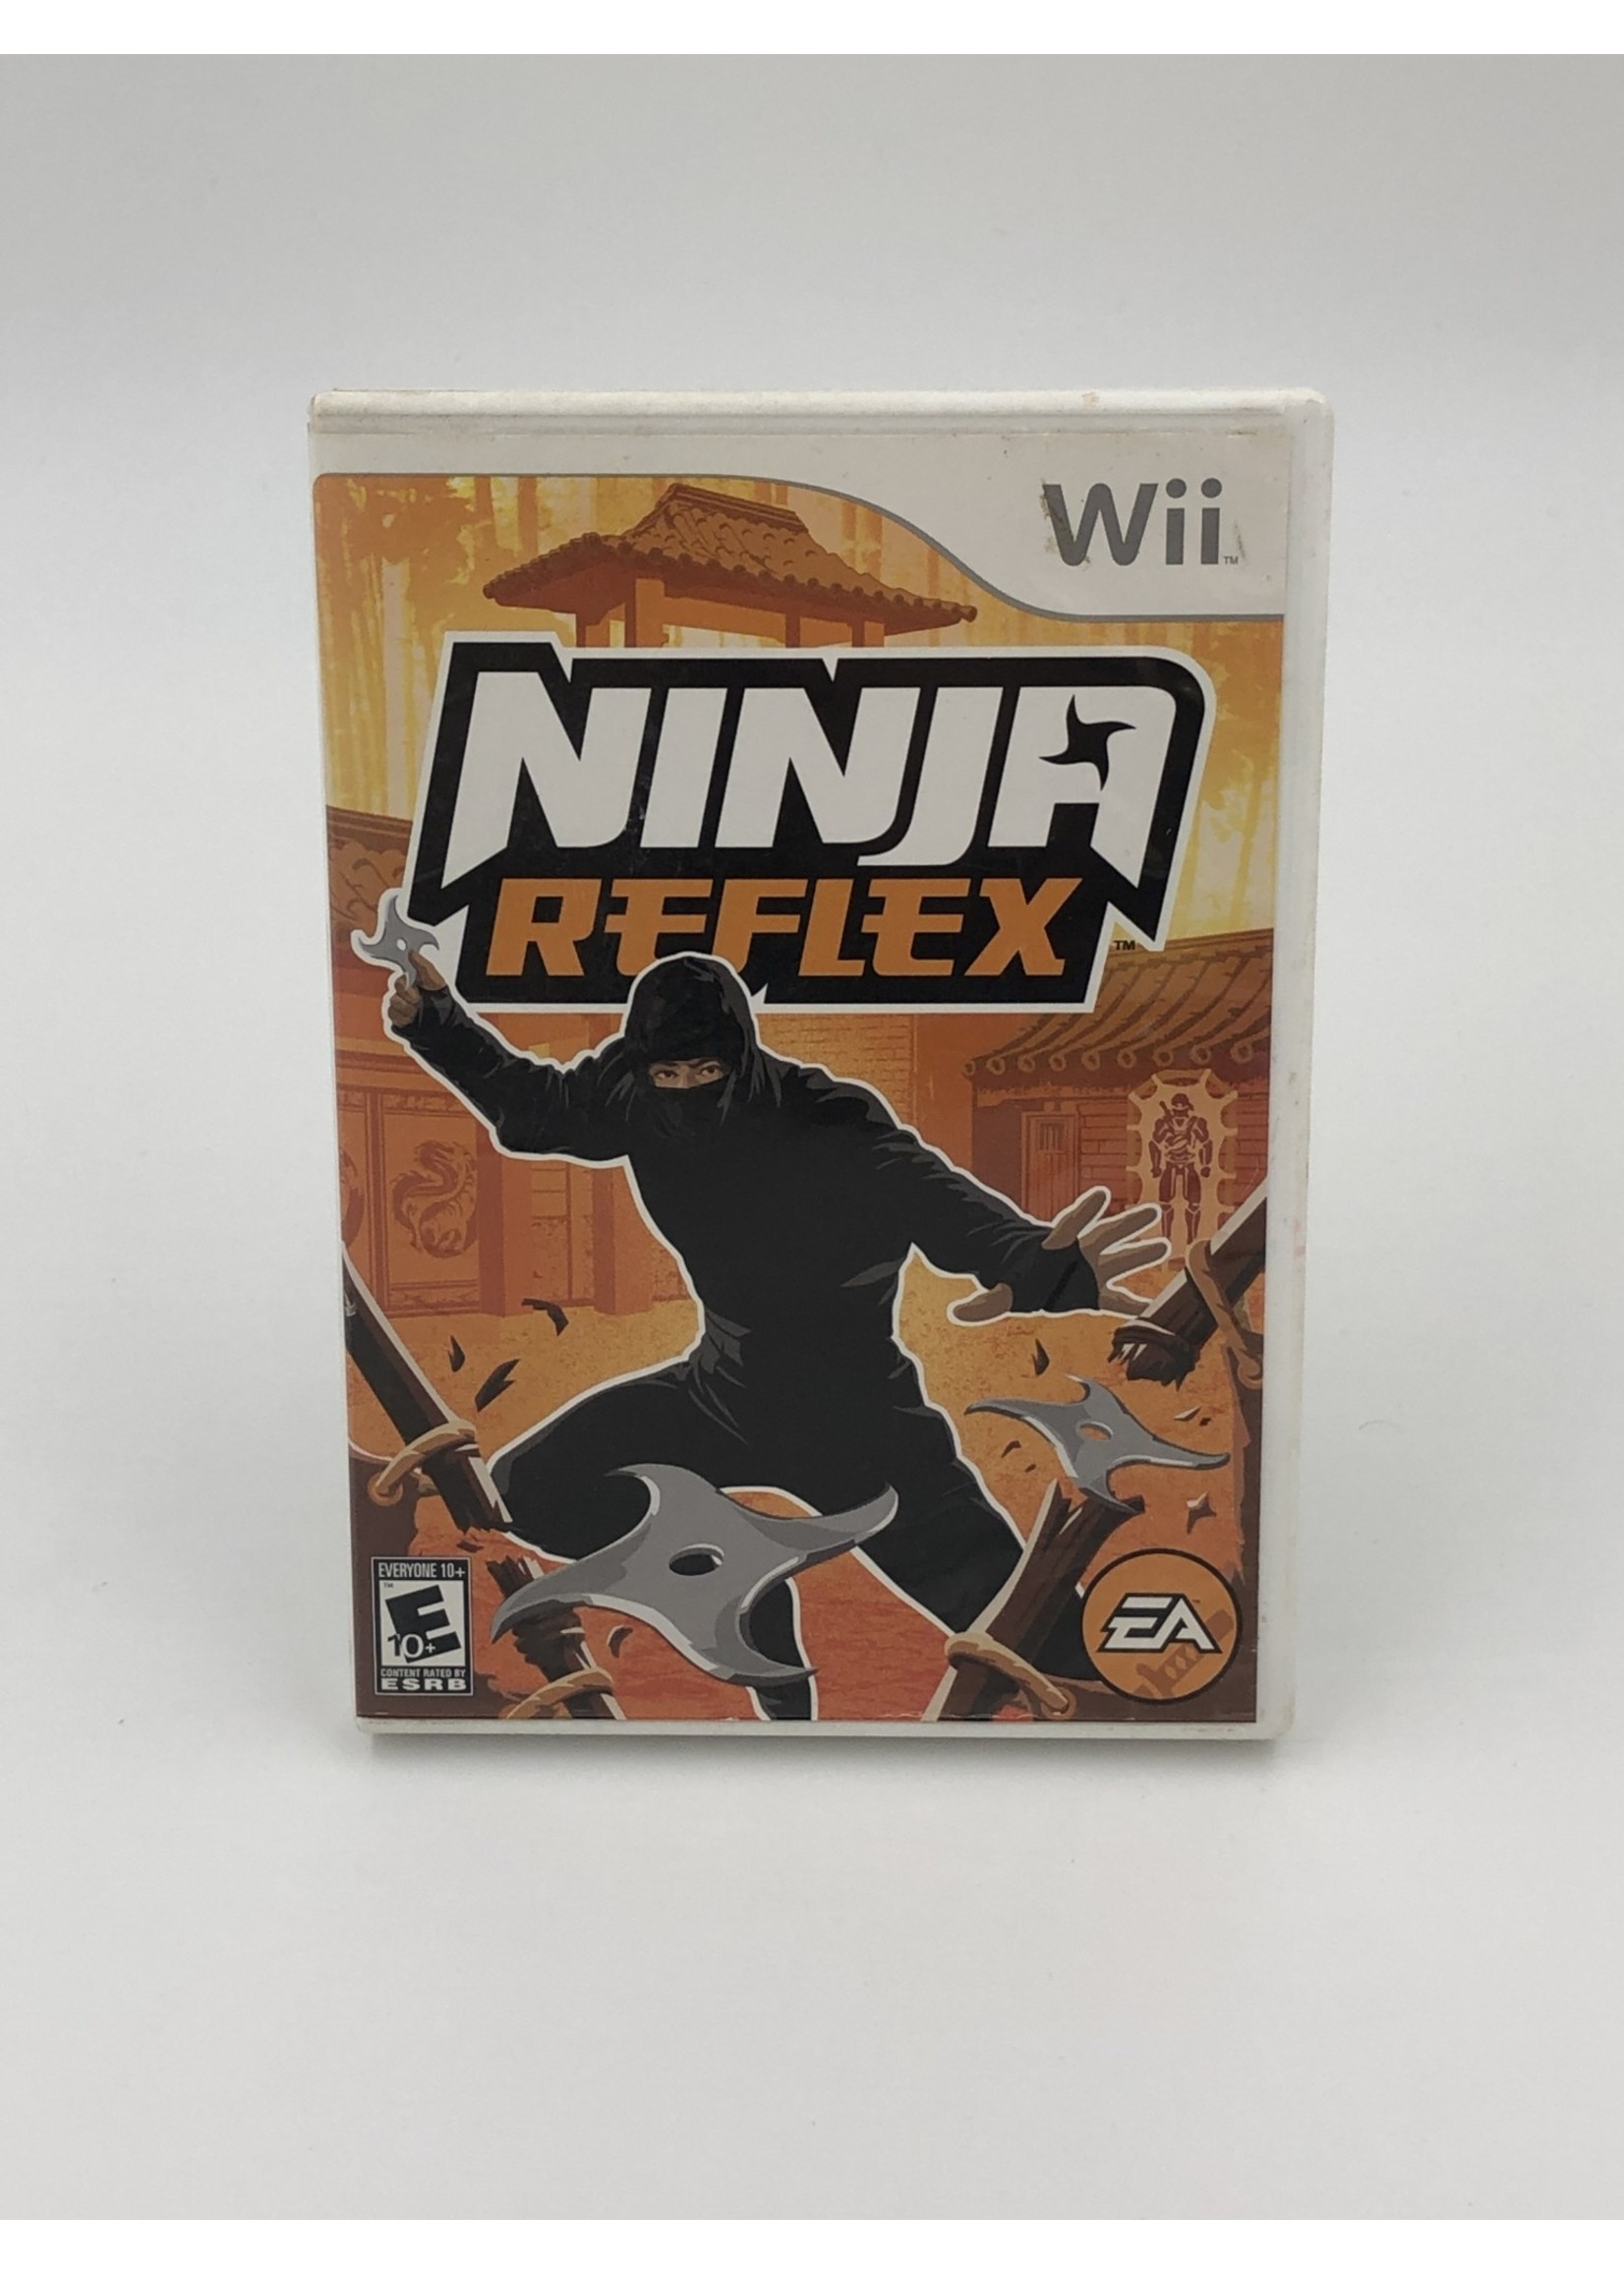 Nintendo   Ninja Reflex - Wii